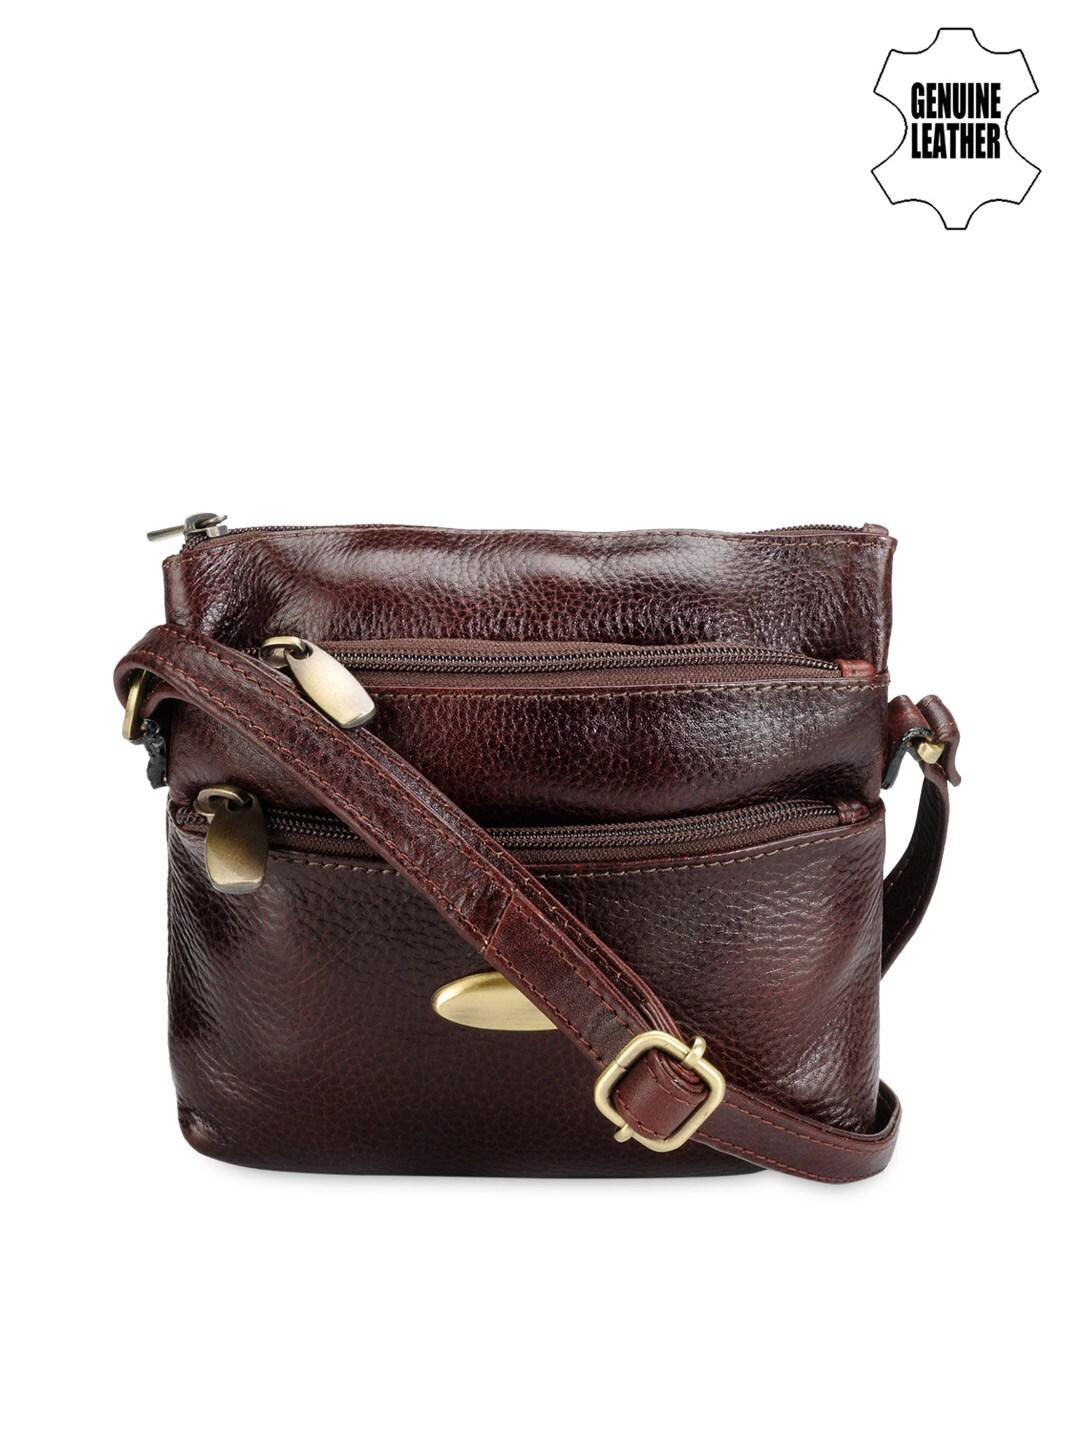 teakwood leather unisex brown leather messenger bag